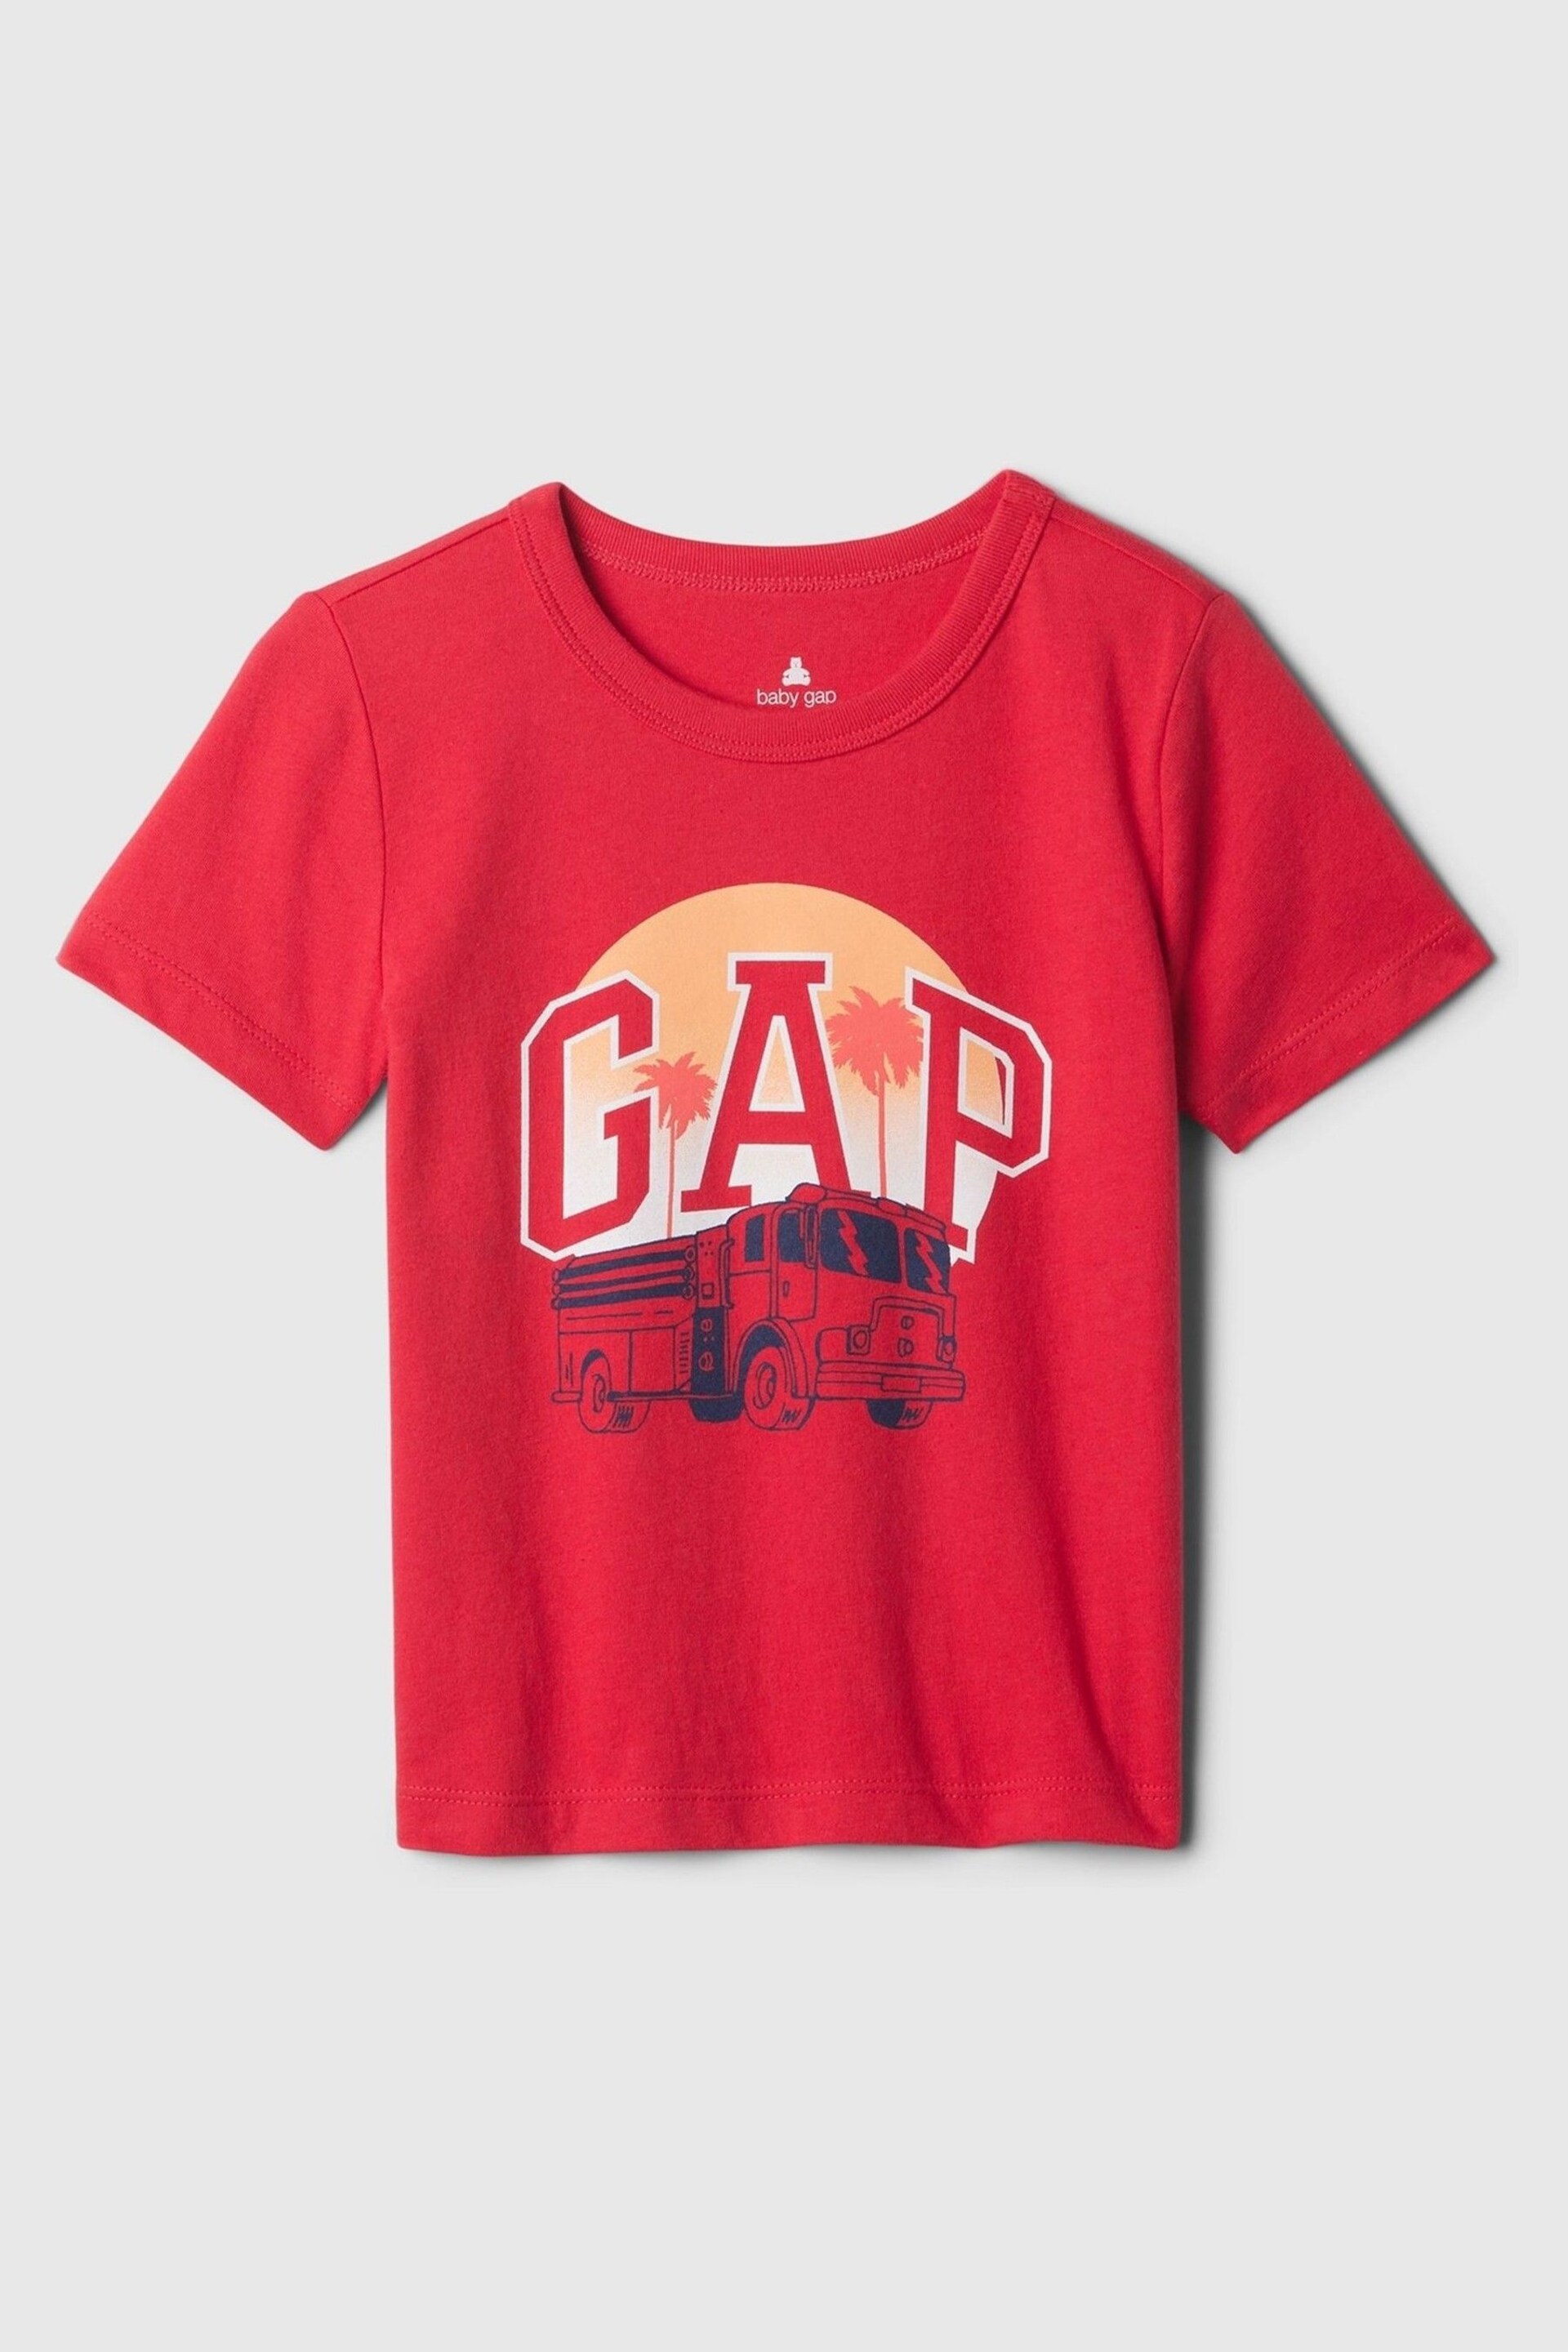 Gap Red Truck Graphic Logo Short Sleeve Crew Neck T-Shirt (Newborn-5yrs) - Image 1 of 2